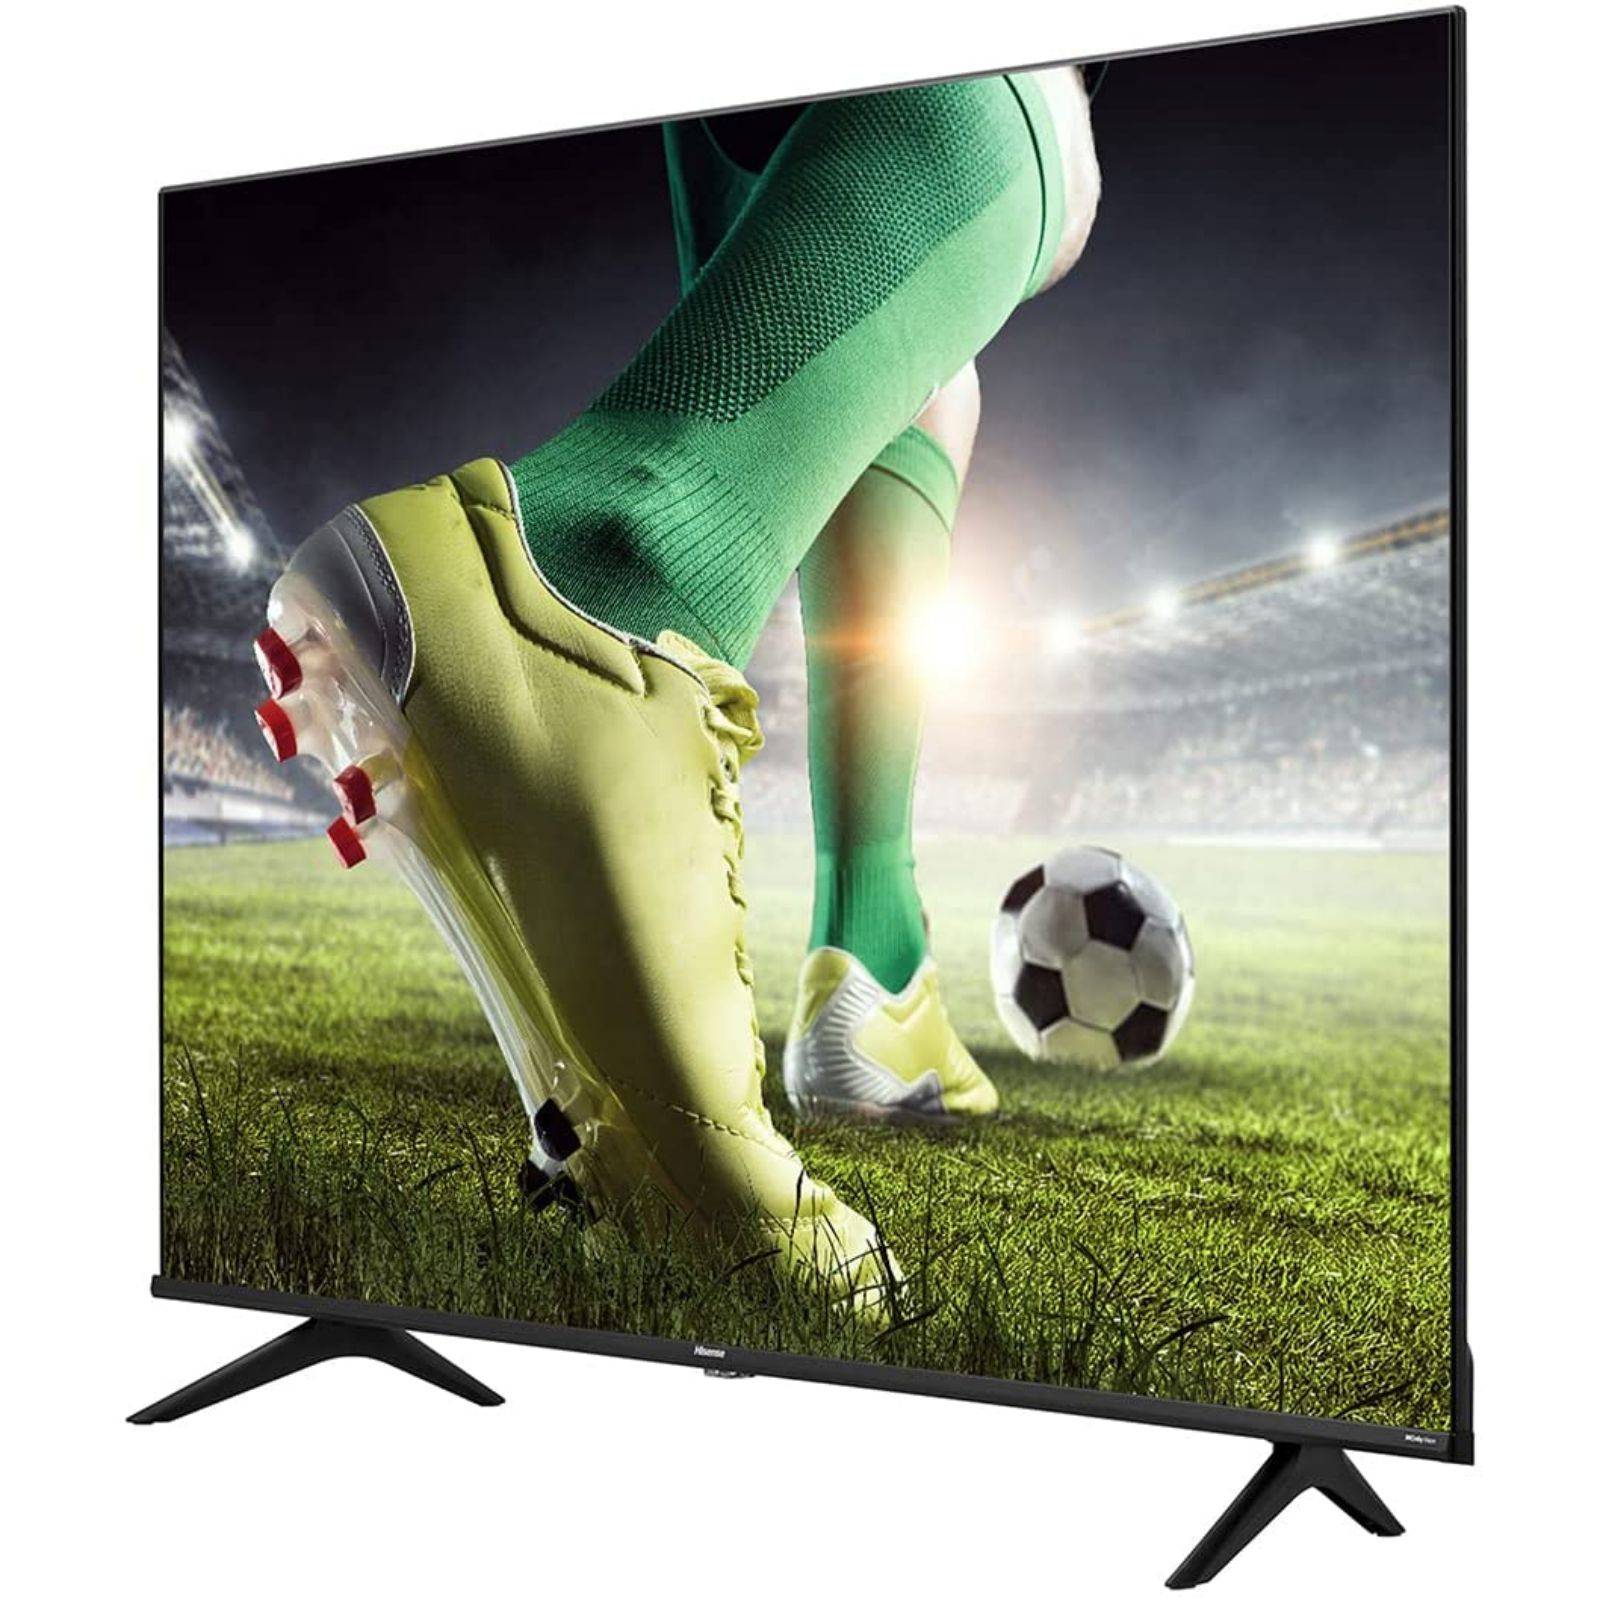 Television Hisense Pantalla 55 Pulgadas 4K Ultra HD Smart TV